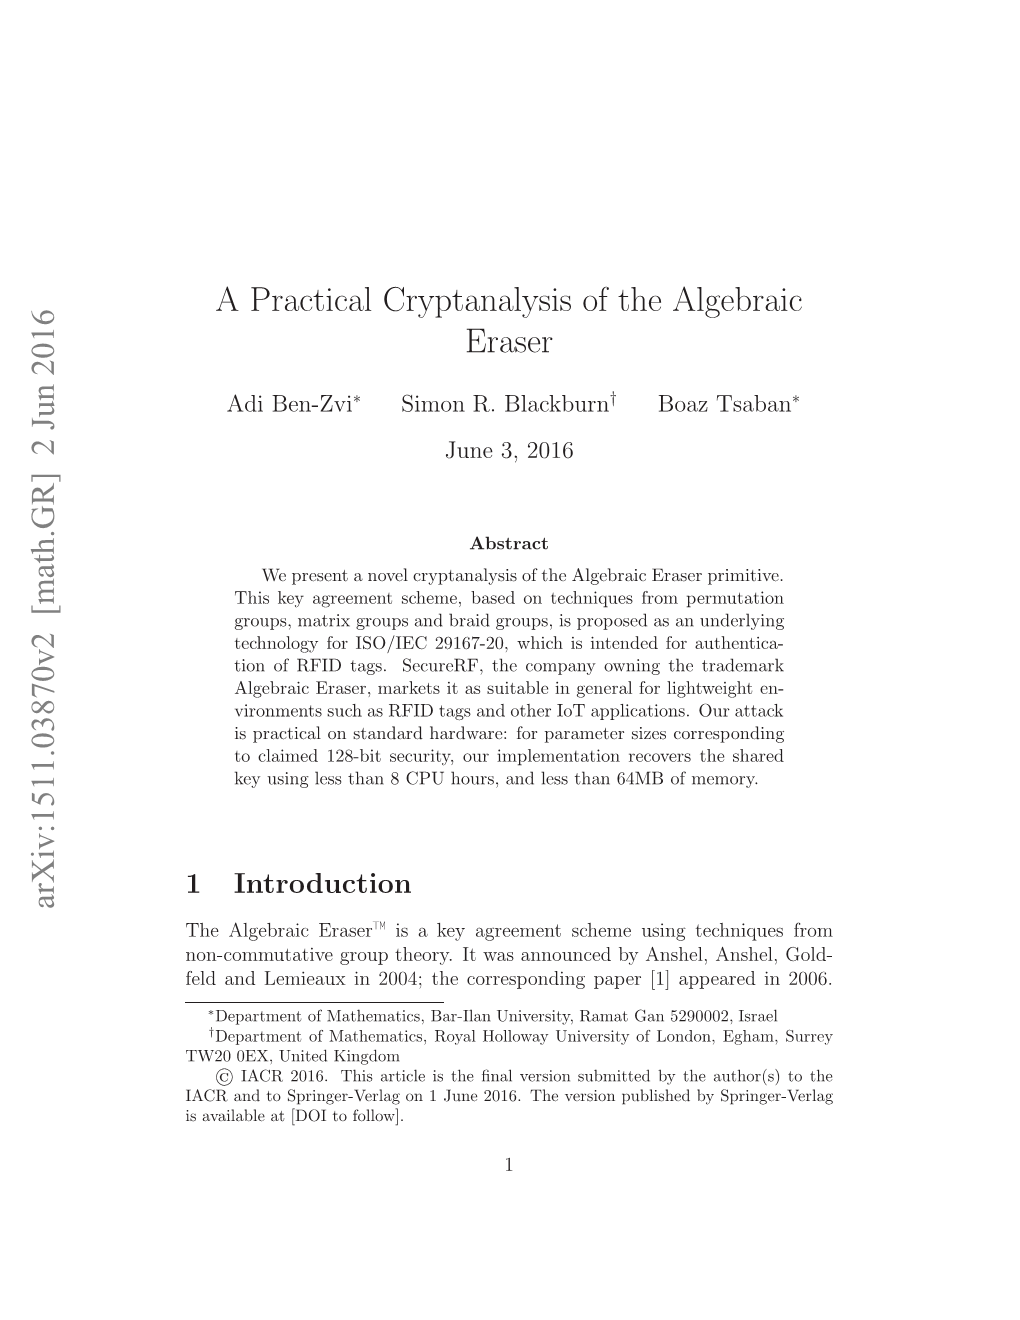 A Practical Cryptanalysis of the Algebraic Eraser